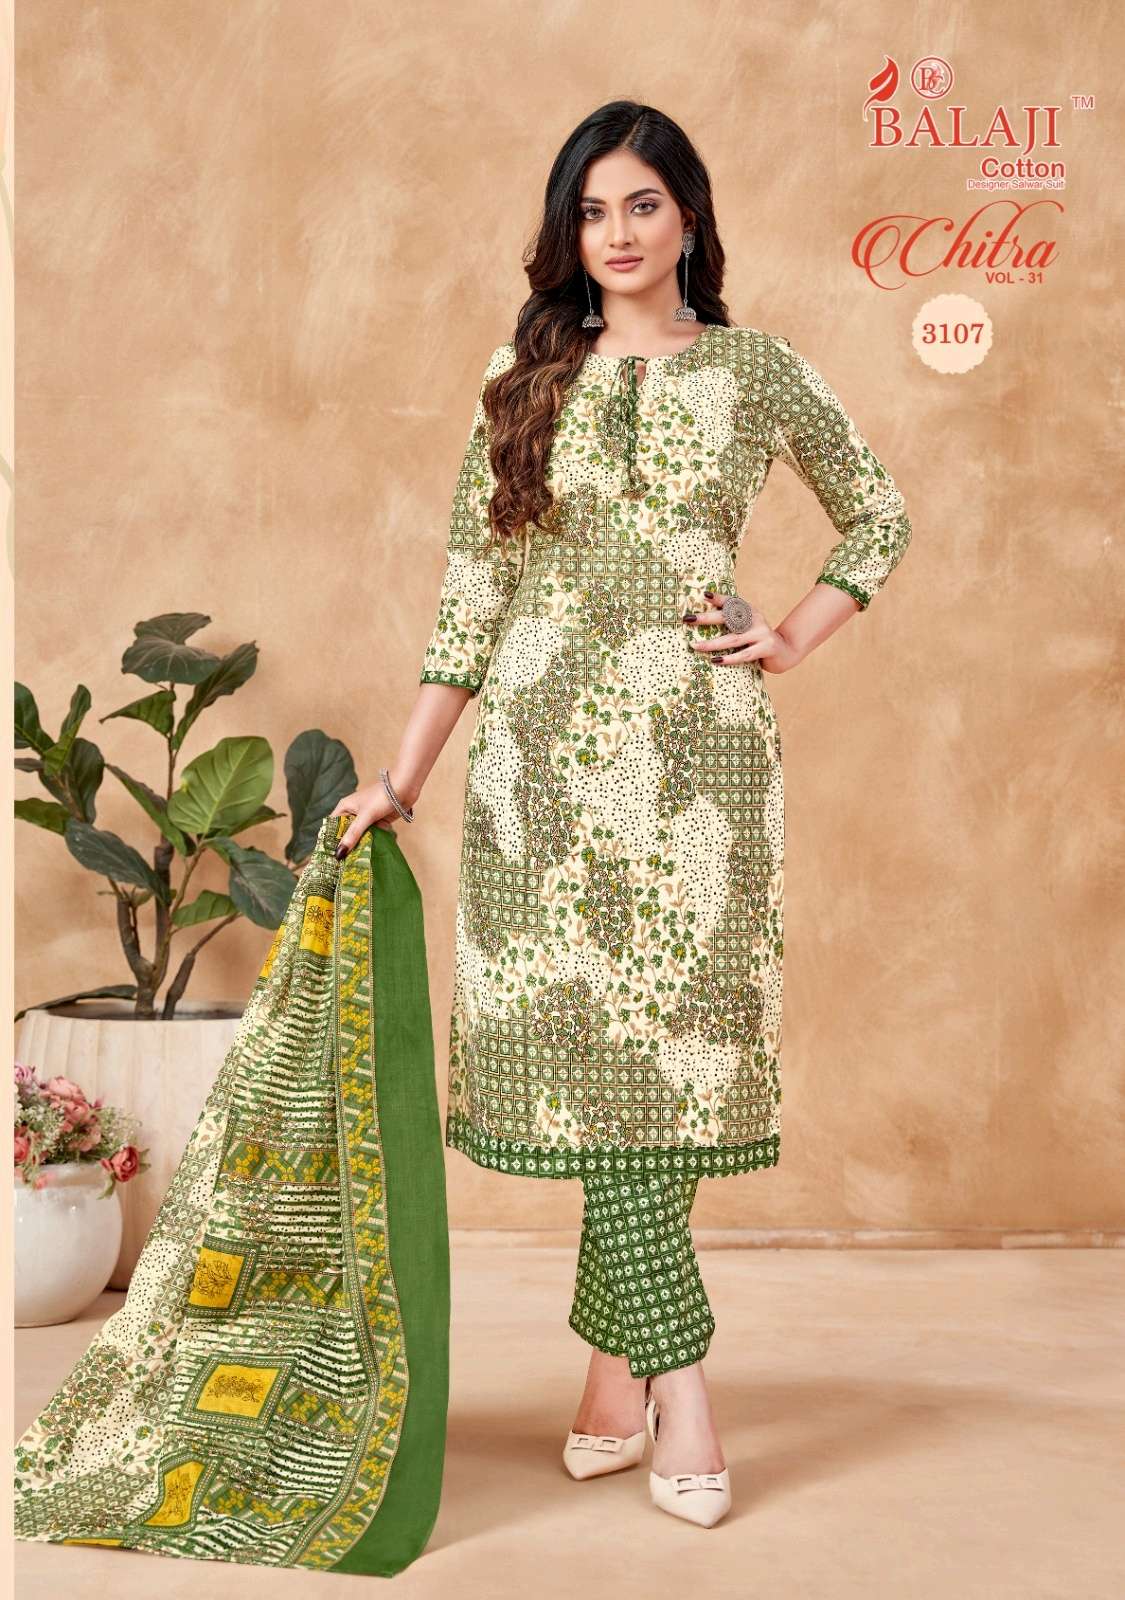 balaji chitra vol-31 3101-3110 series latest fancy salwar kameez wholesaler surat gujarat